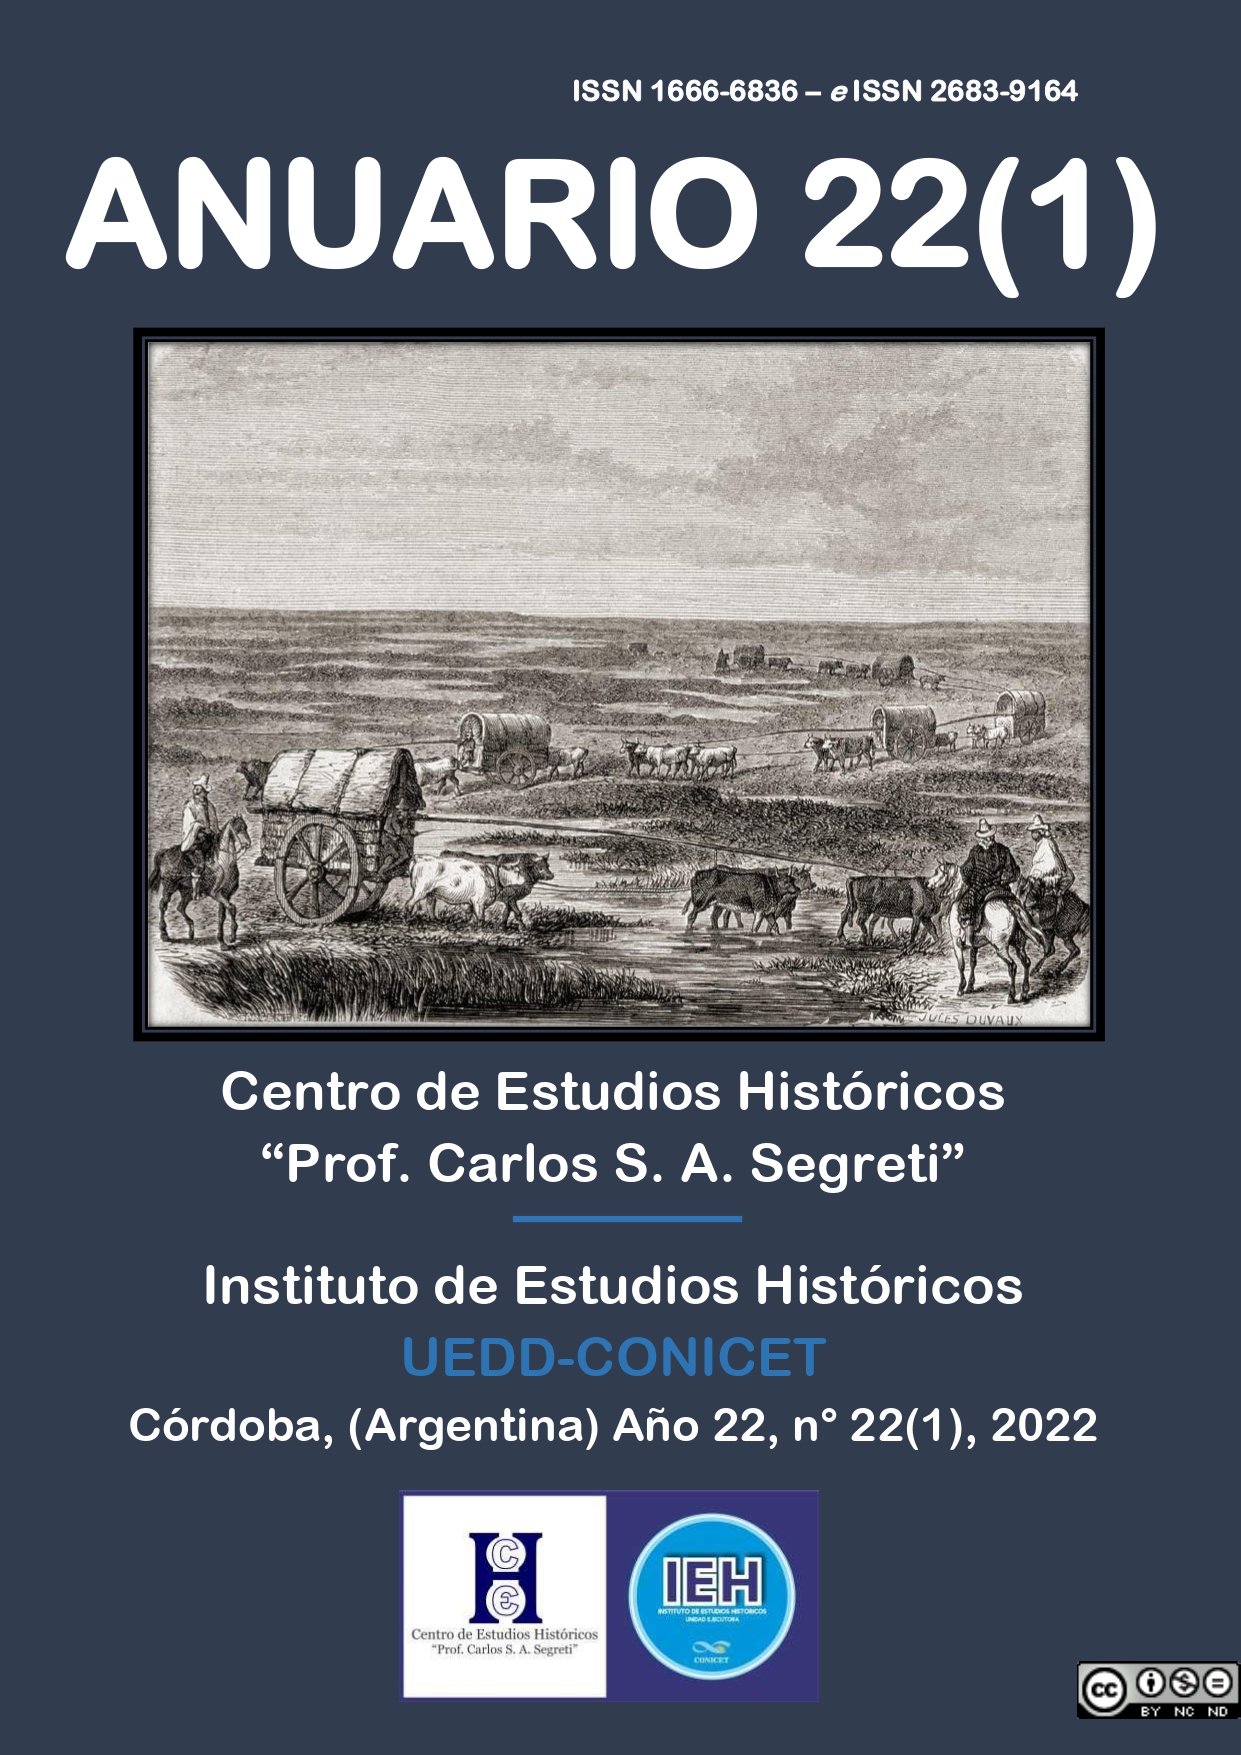 					Ver Vol. 1 Núm. 22 (2022): Anuario del Centro de Estudios Históricos "Prof. Carlos S. A. Segreti" 22(1)
				